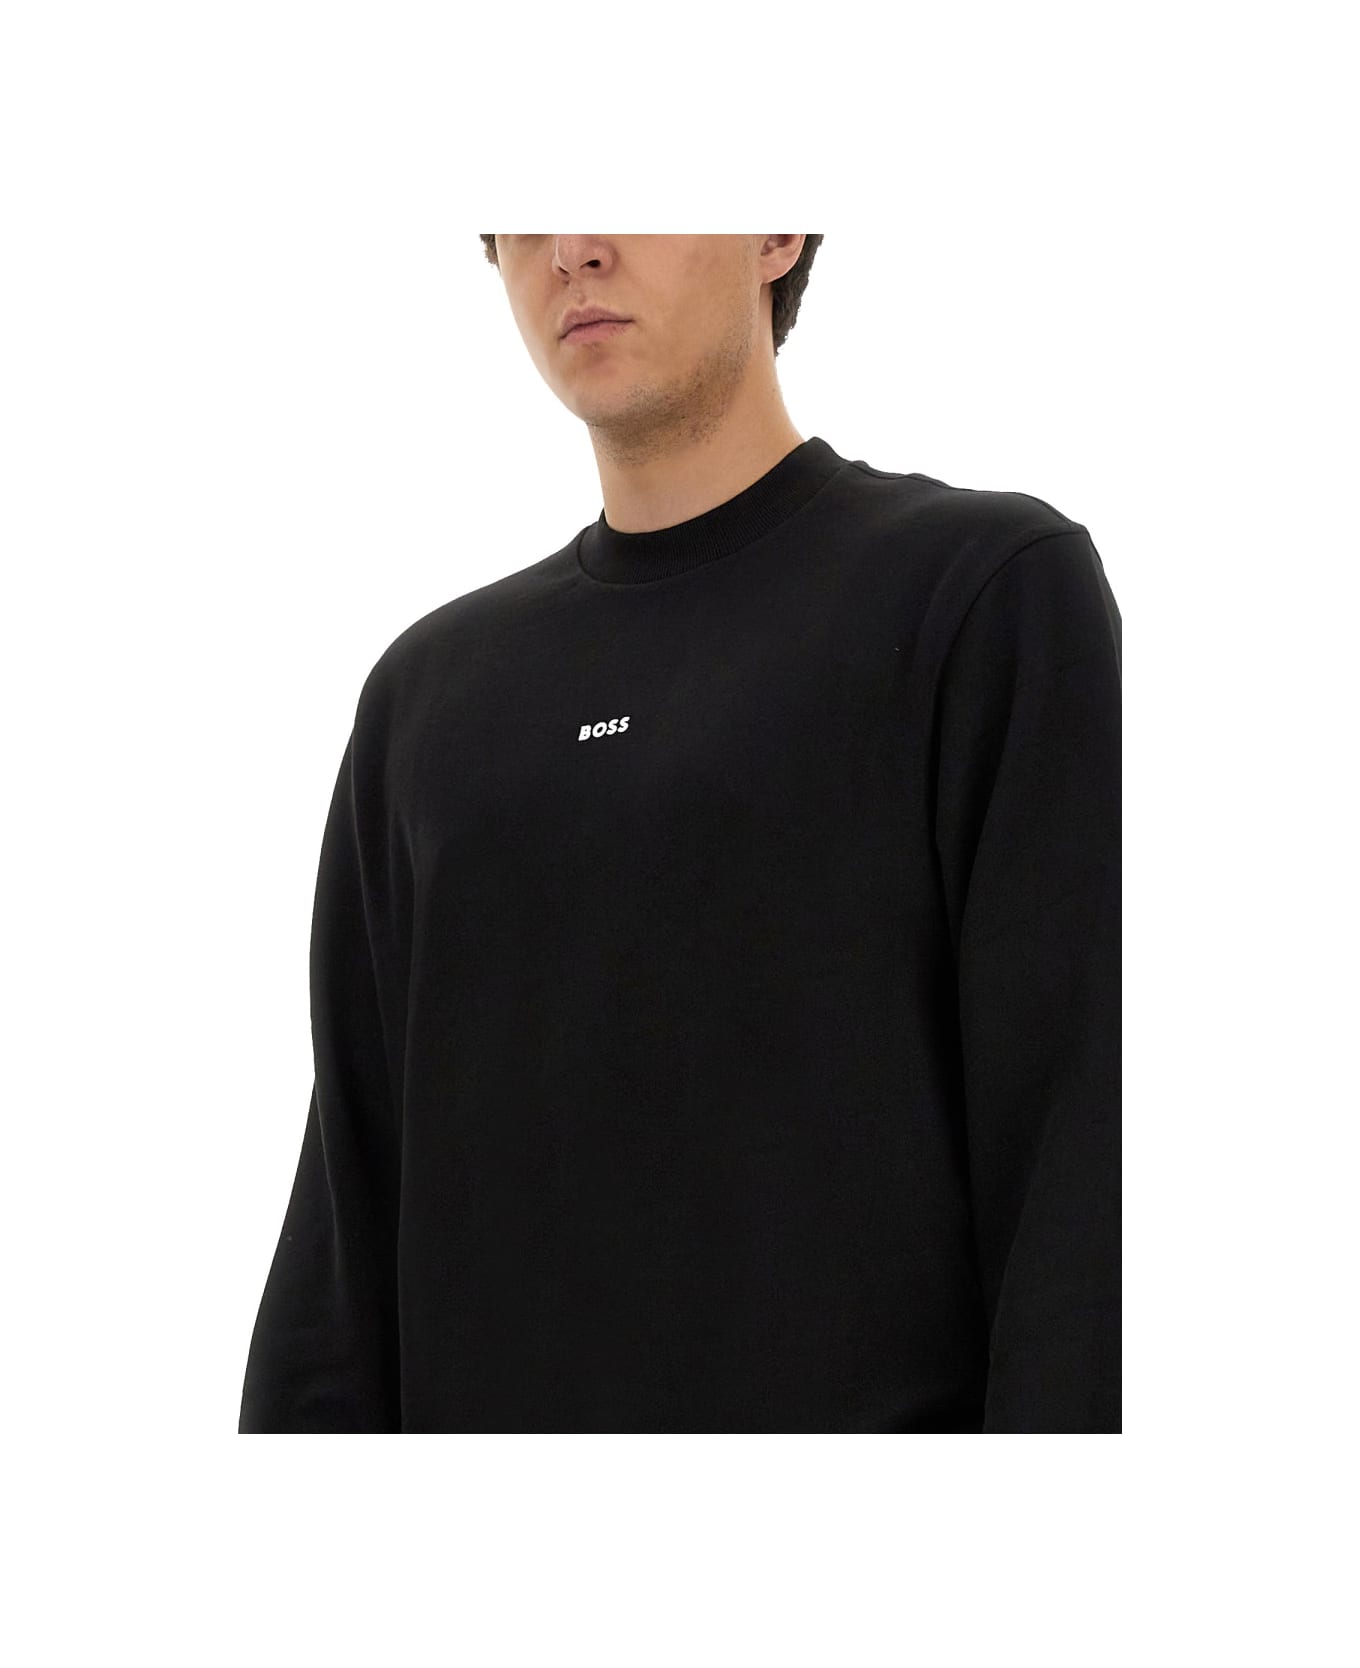 Hugo Boss Sweatshirt With Logo - BLACK フリース